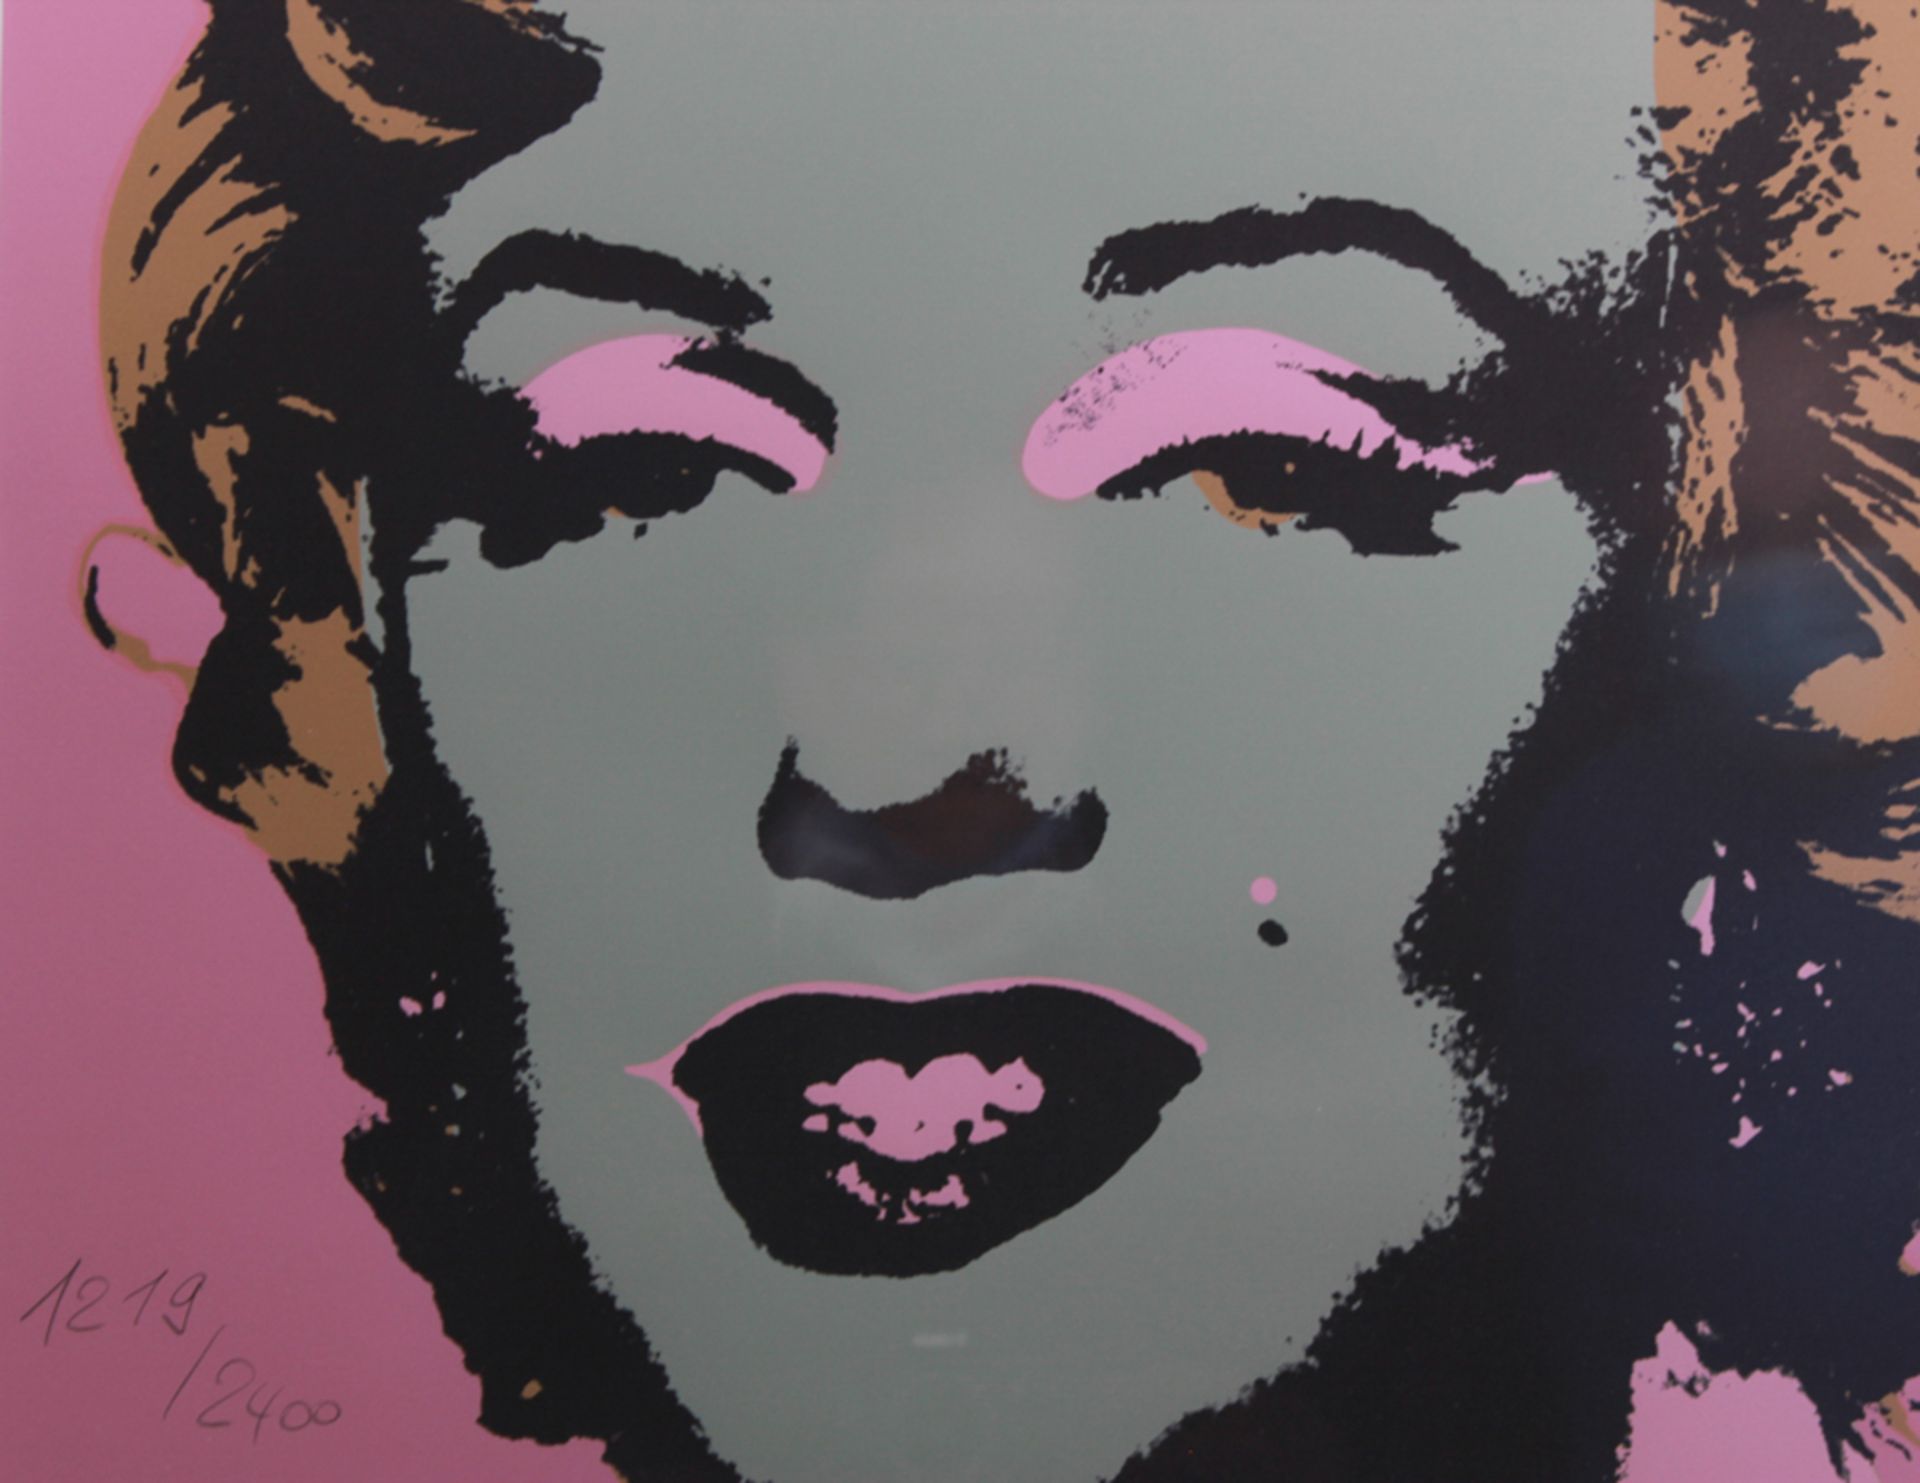 Andy Warhol (1928 - 1987) - Image 6 of 6